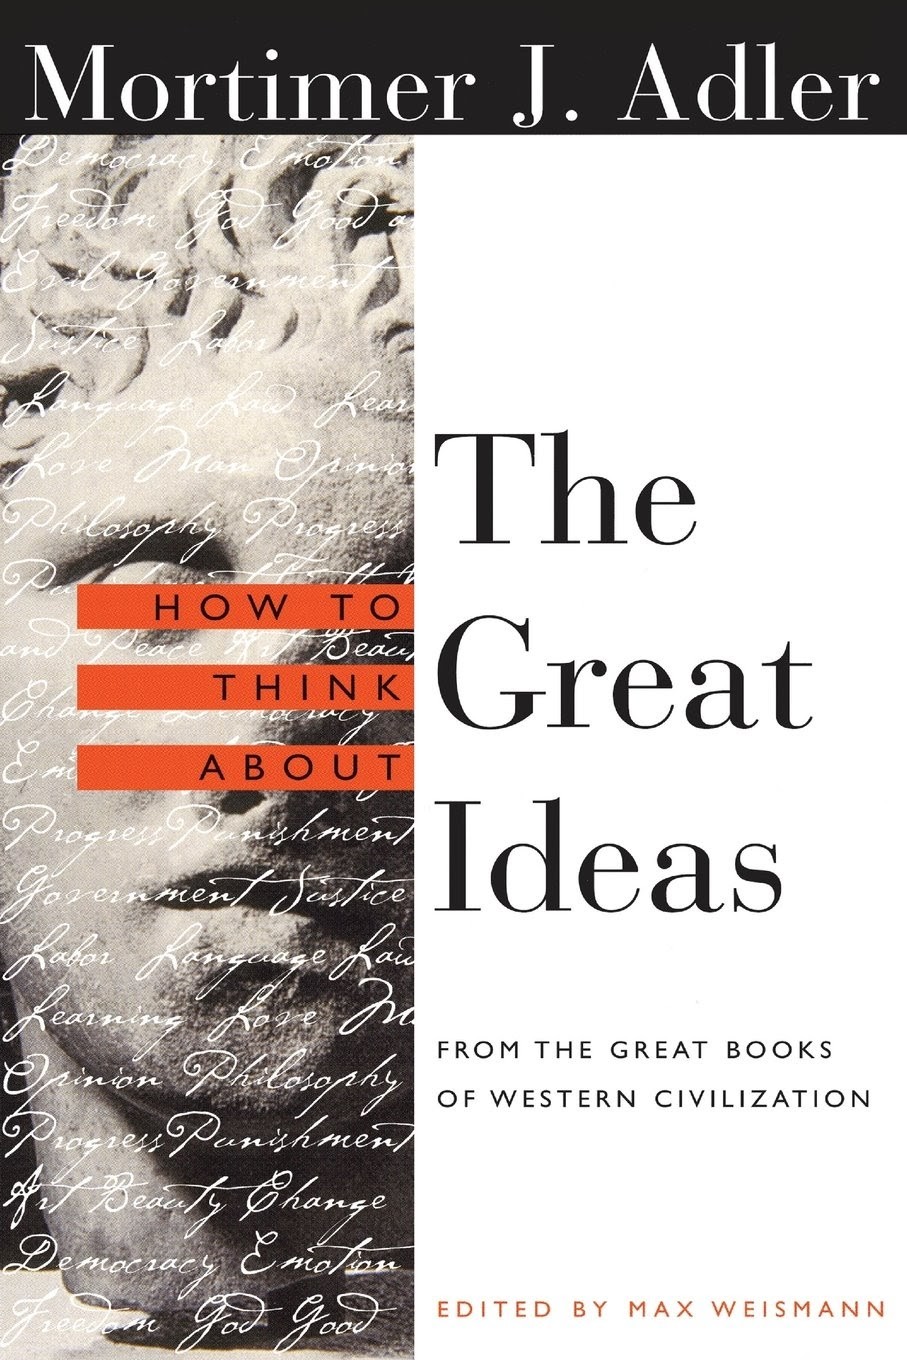 The Great Ideas Vol II